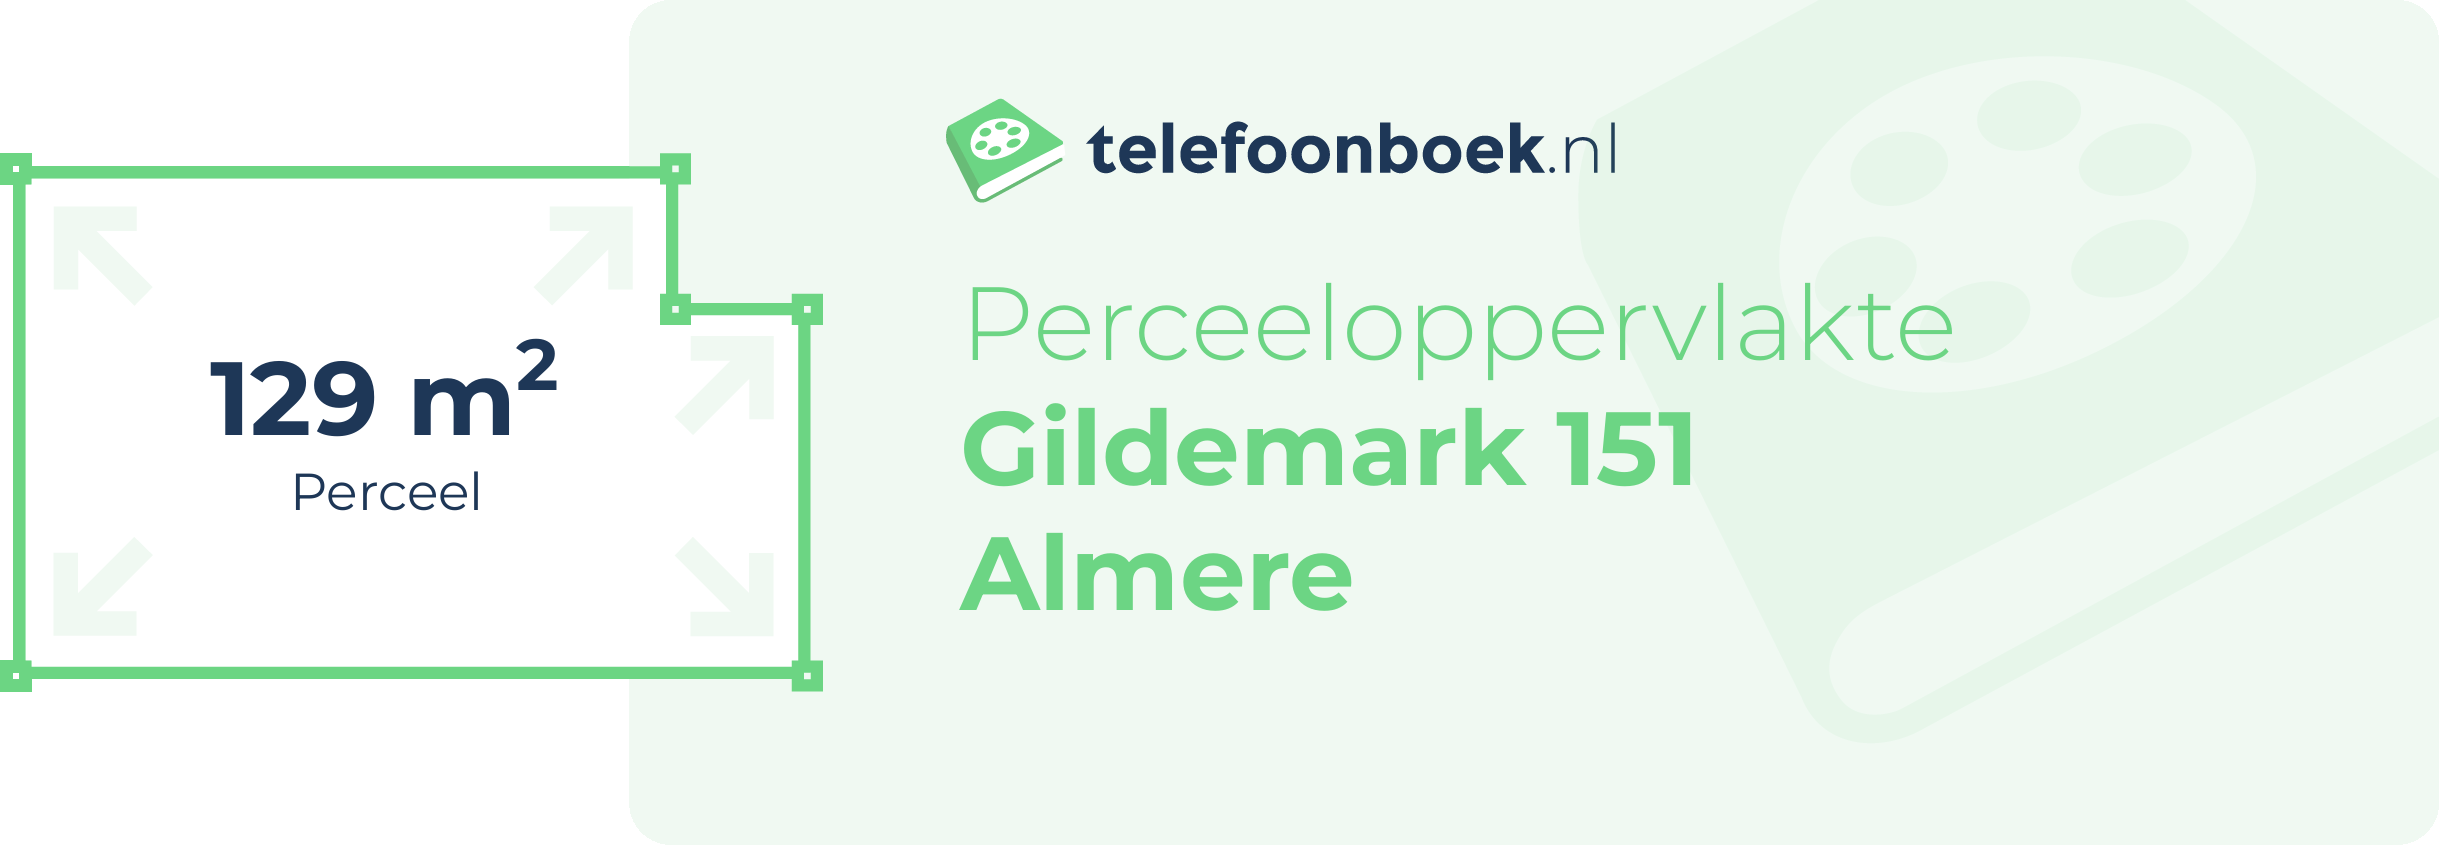 Perceeloppervlakte Gildemark 151 Almere